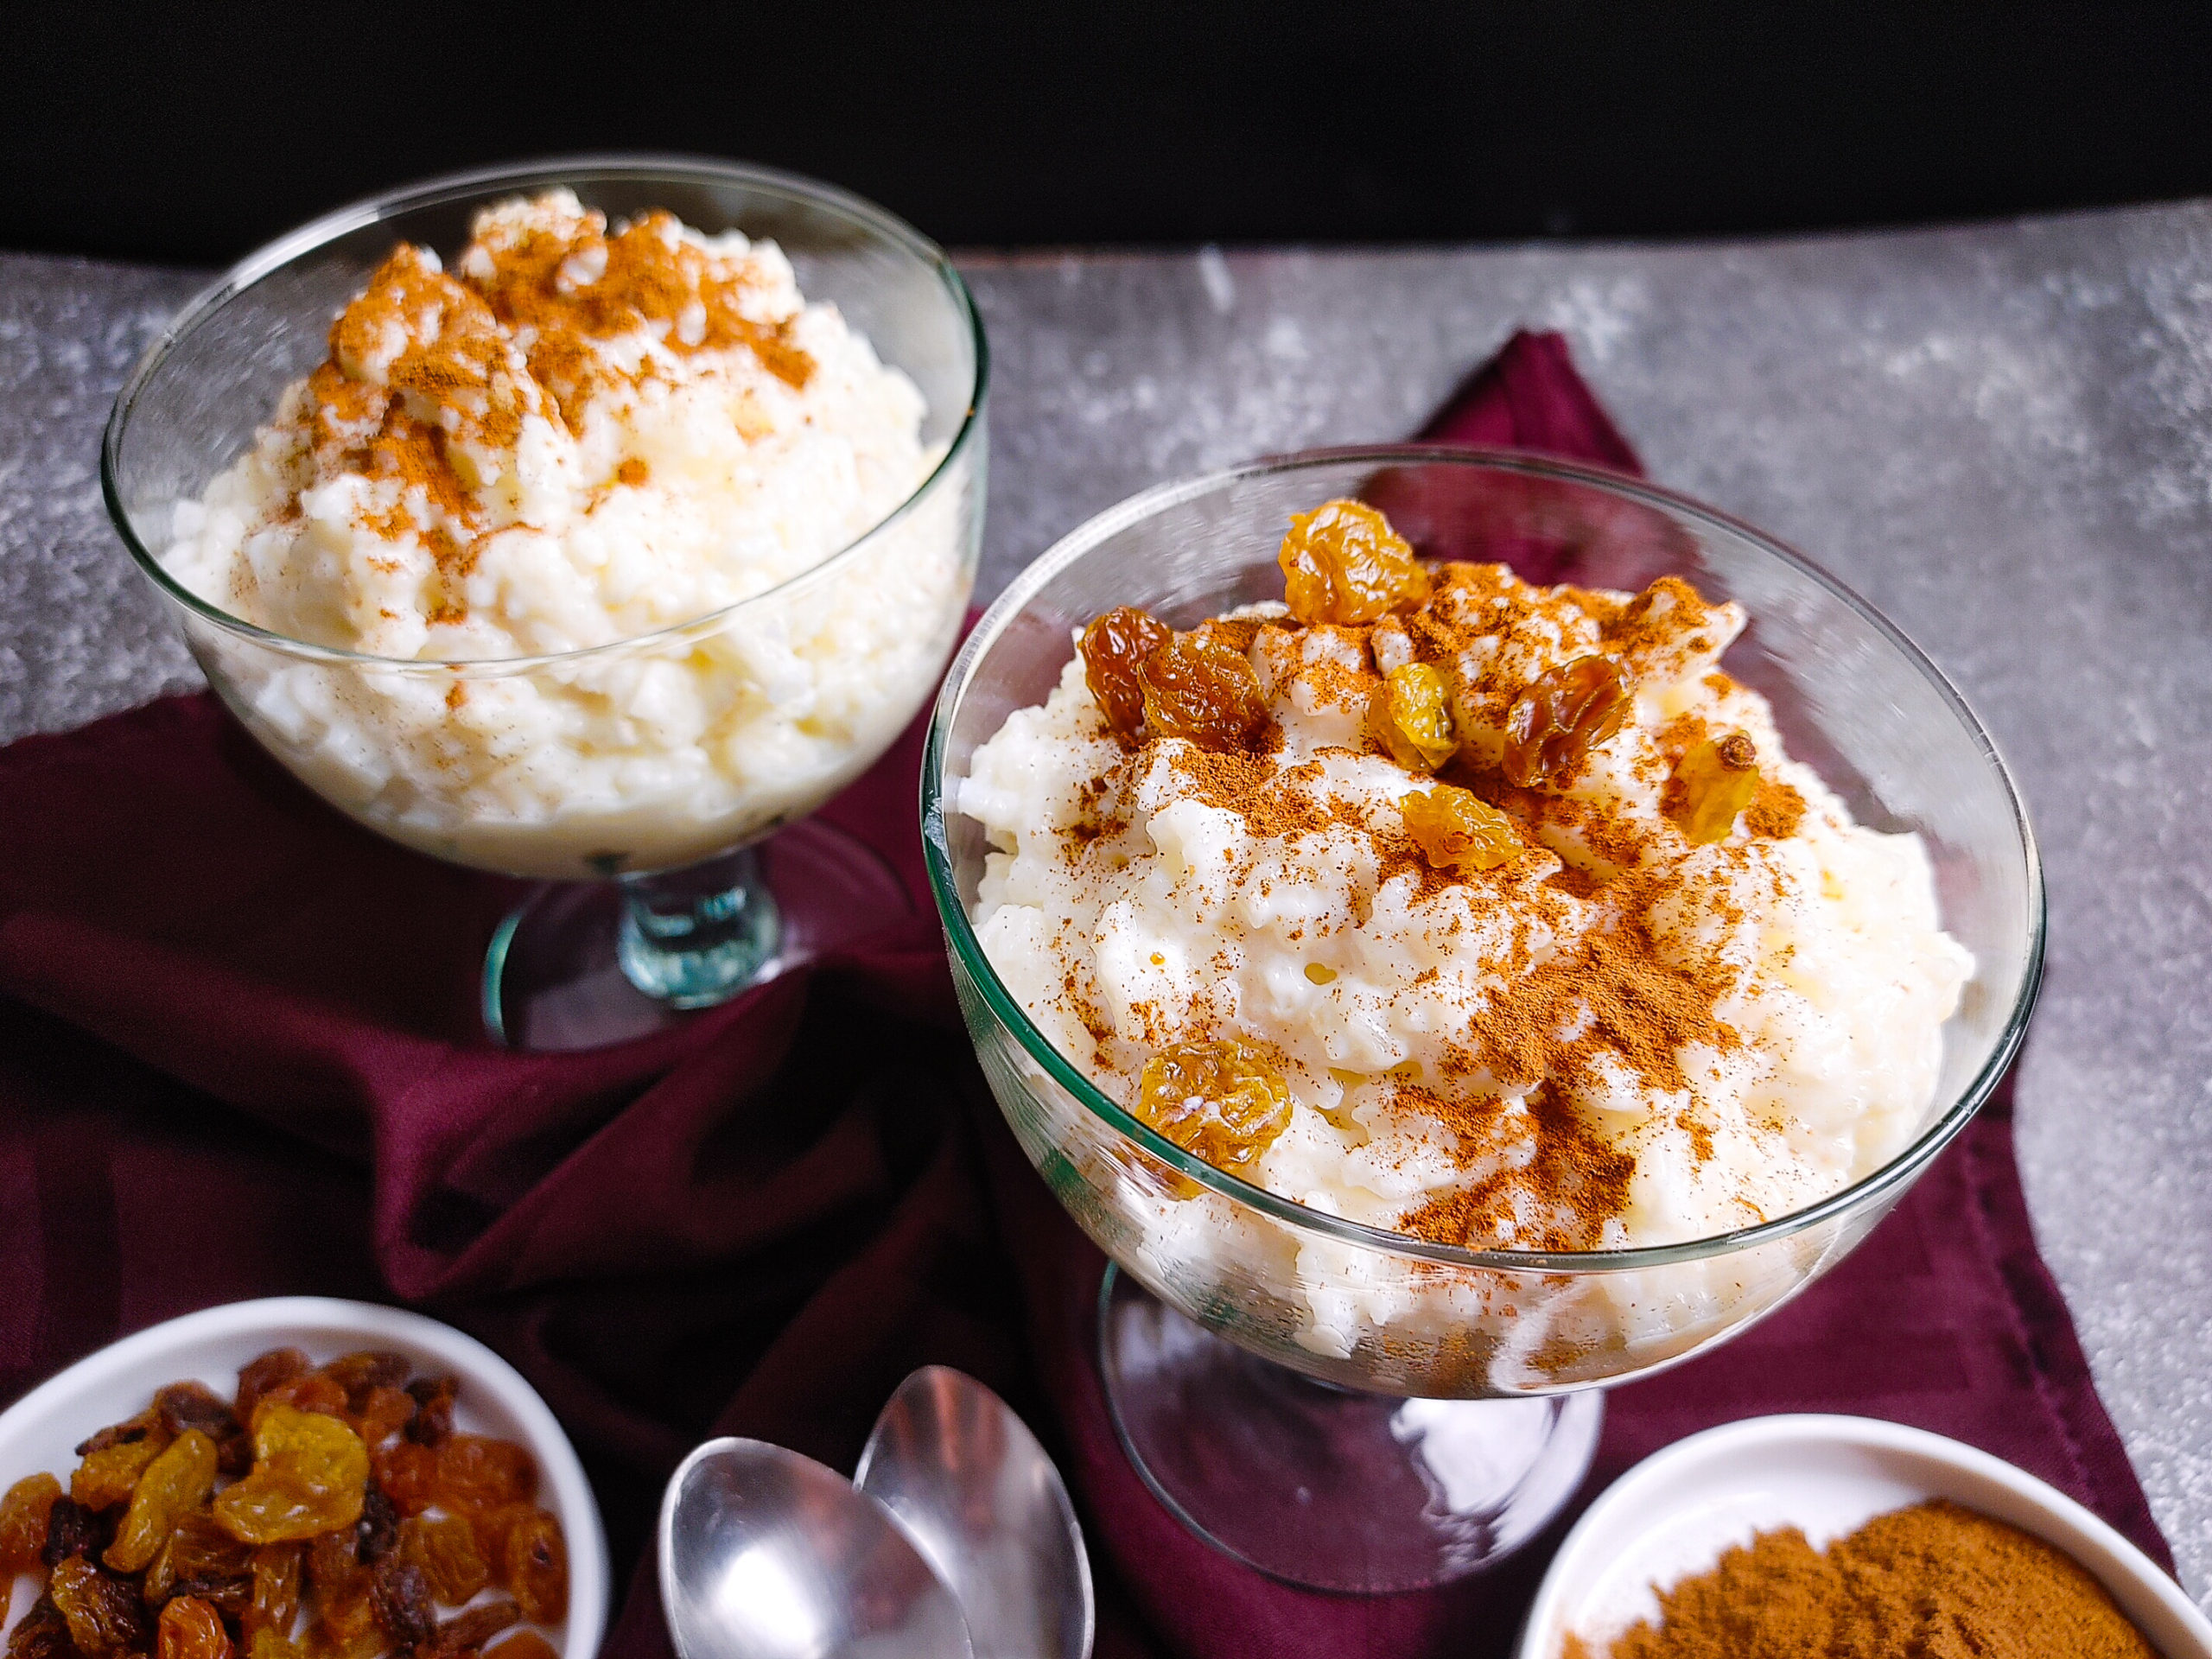 Sutlijas – Balkan Rice Pudding